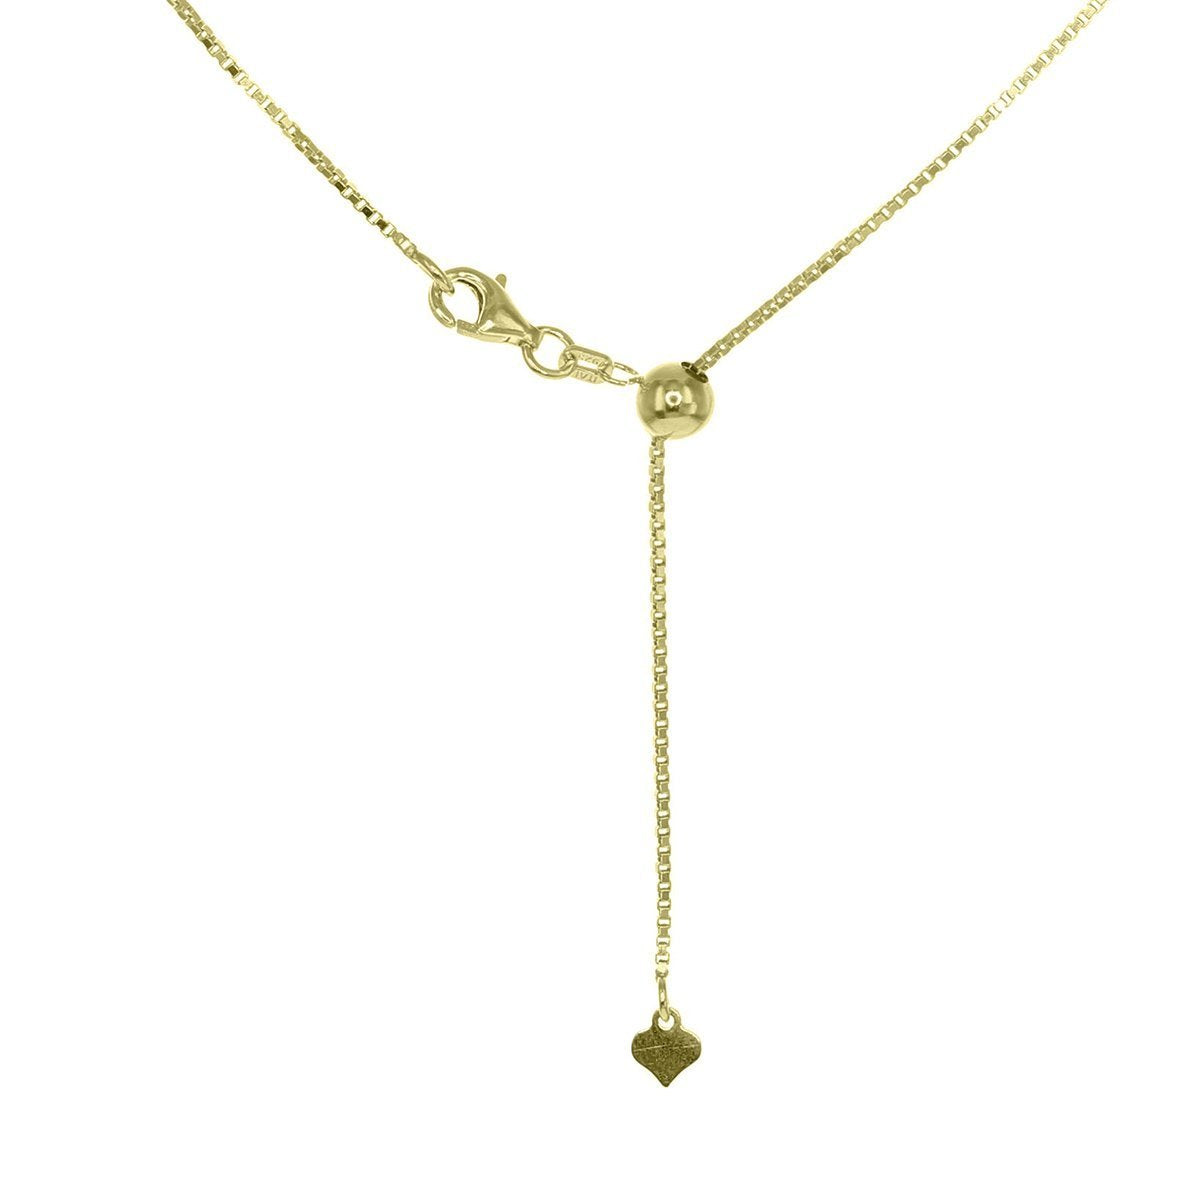 Adjustable Venezia Box Necklace Extender (Gold) Gold Roma Italian Adjustables Roma Designer Jewelry